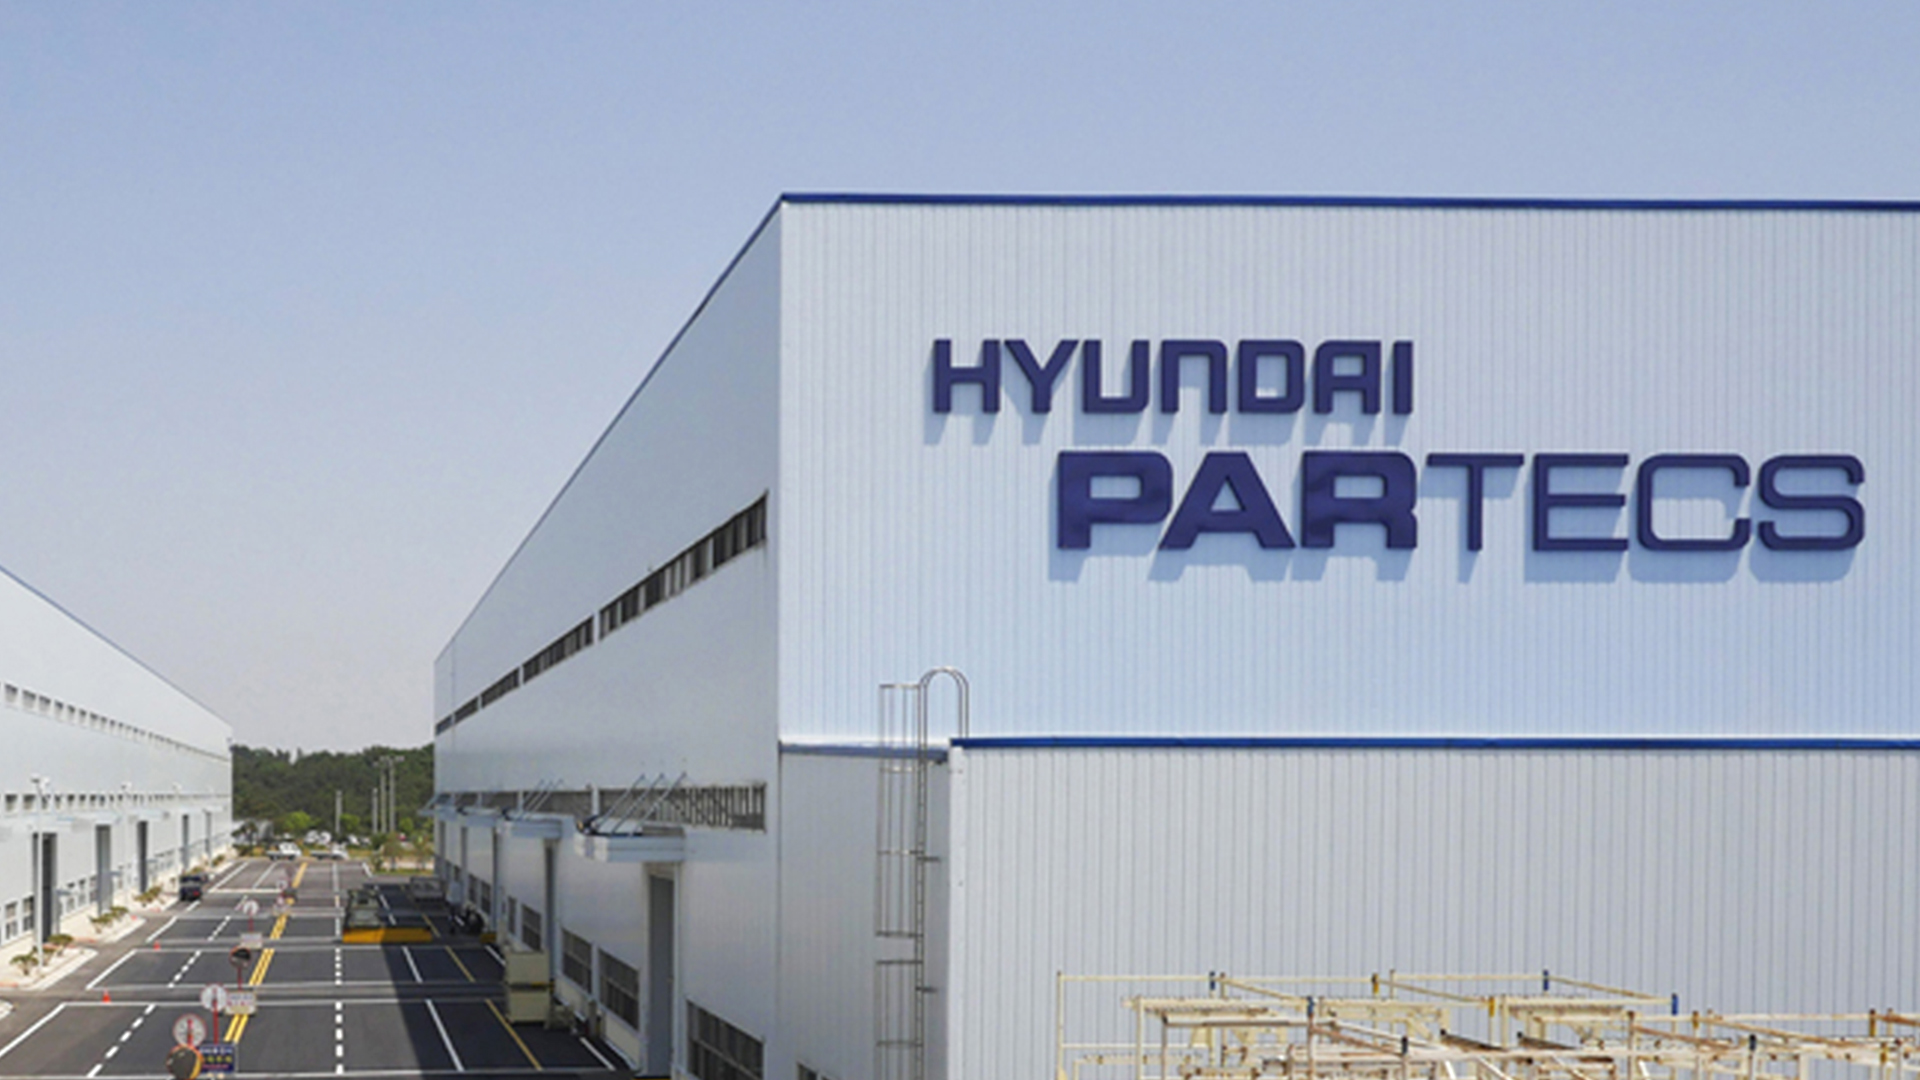 Hyundai Partecs factory view